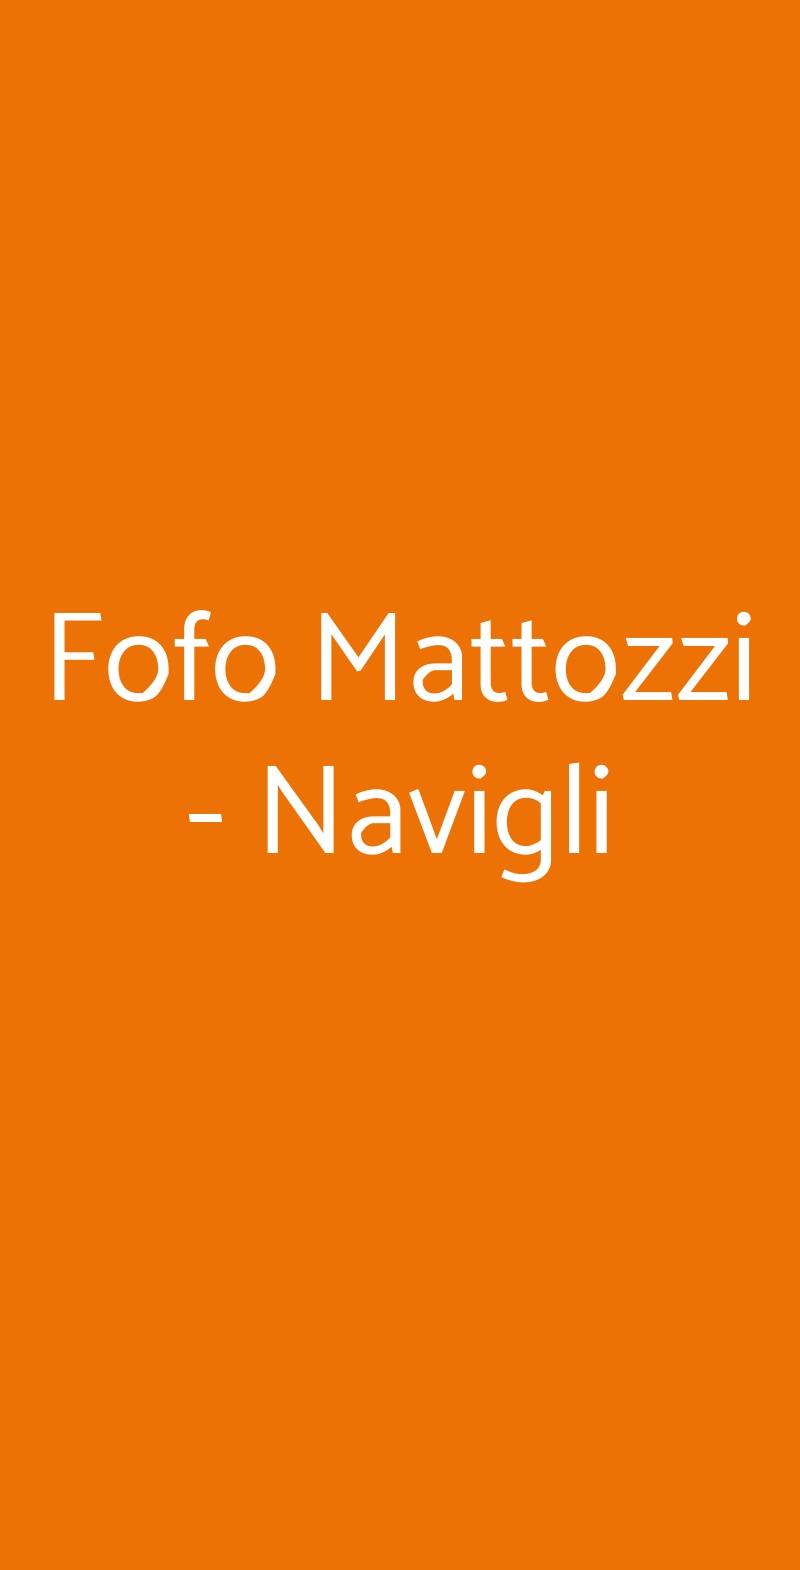 Fofo Mattozzi - Navigli Milano menù 1 pagina